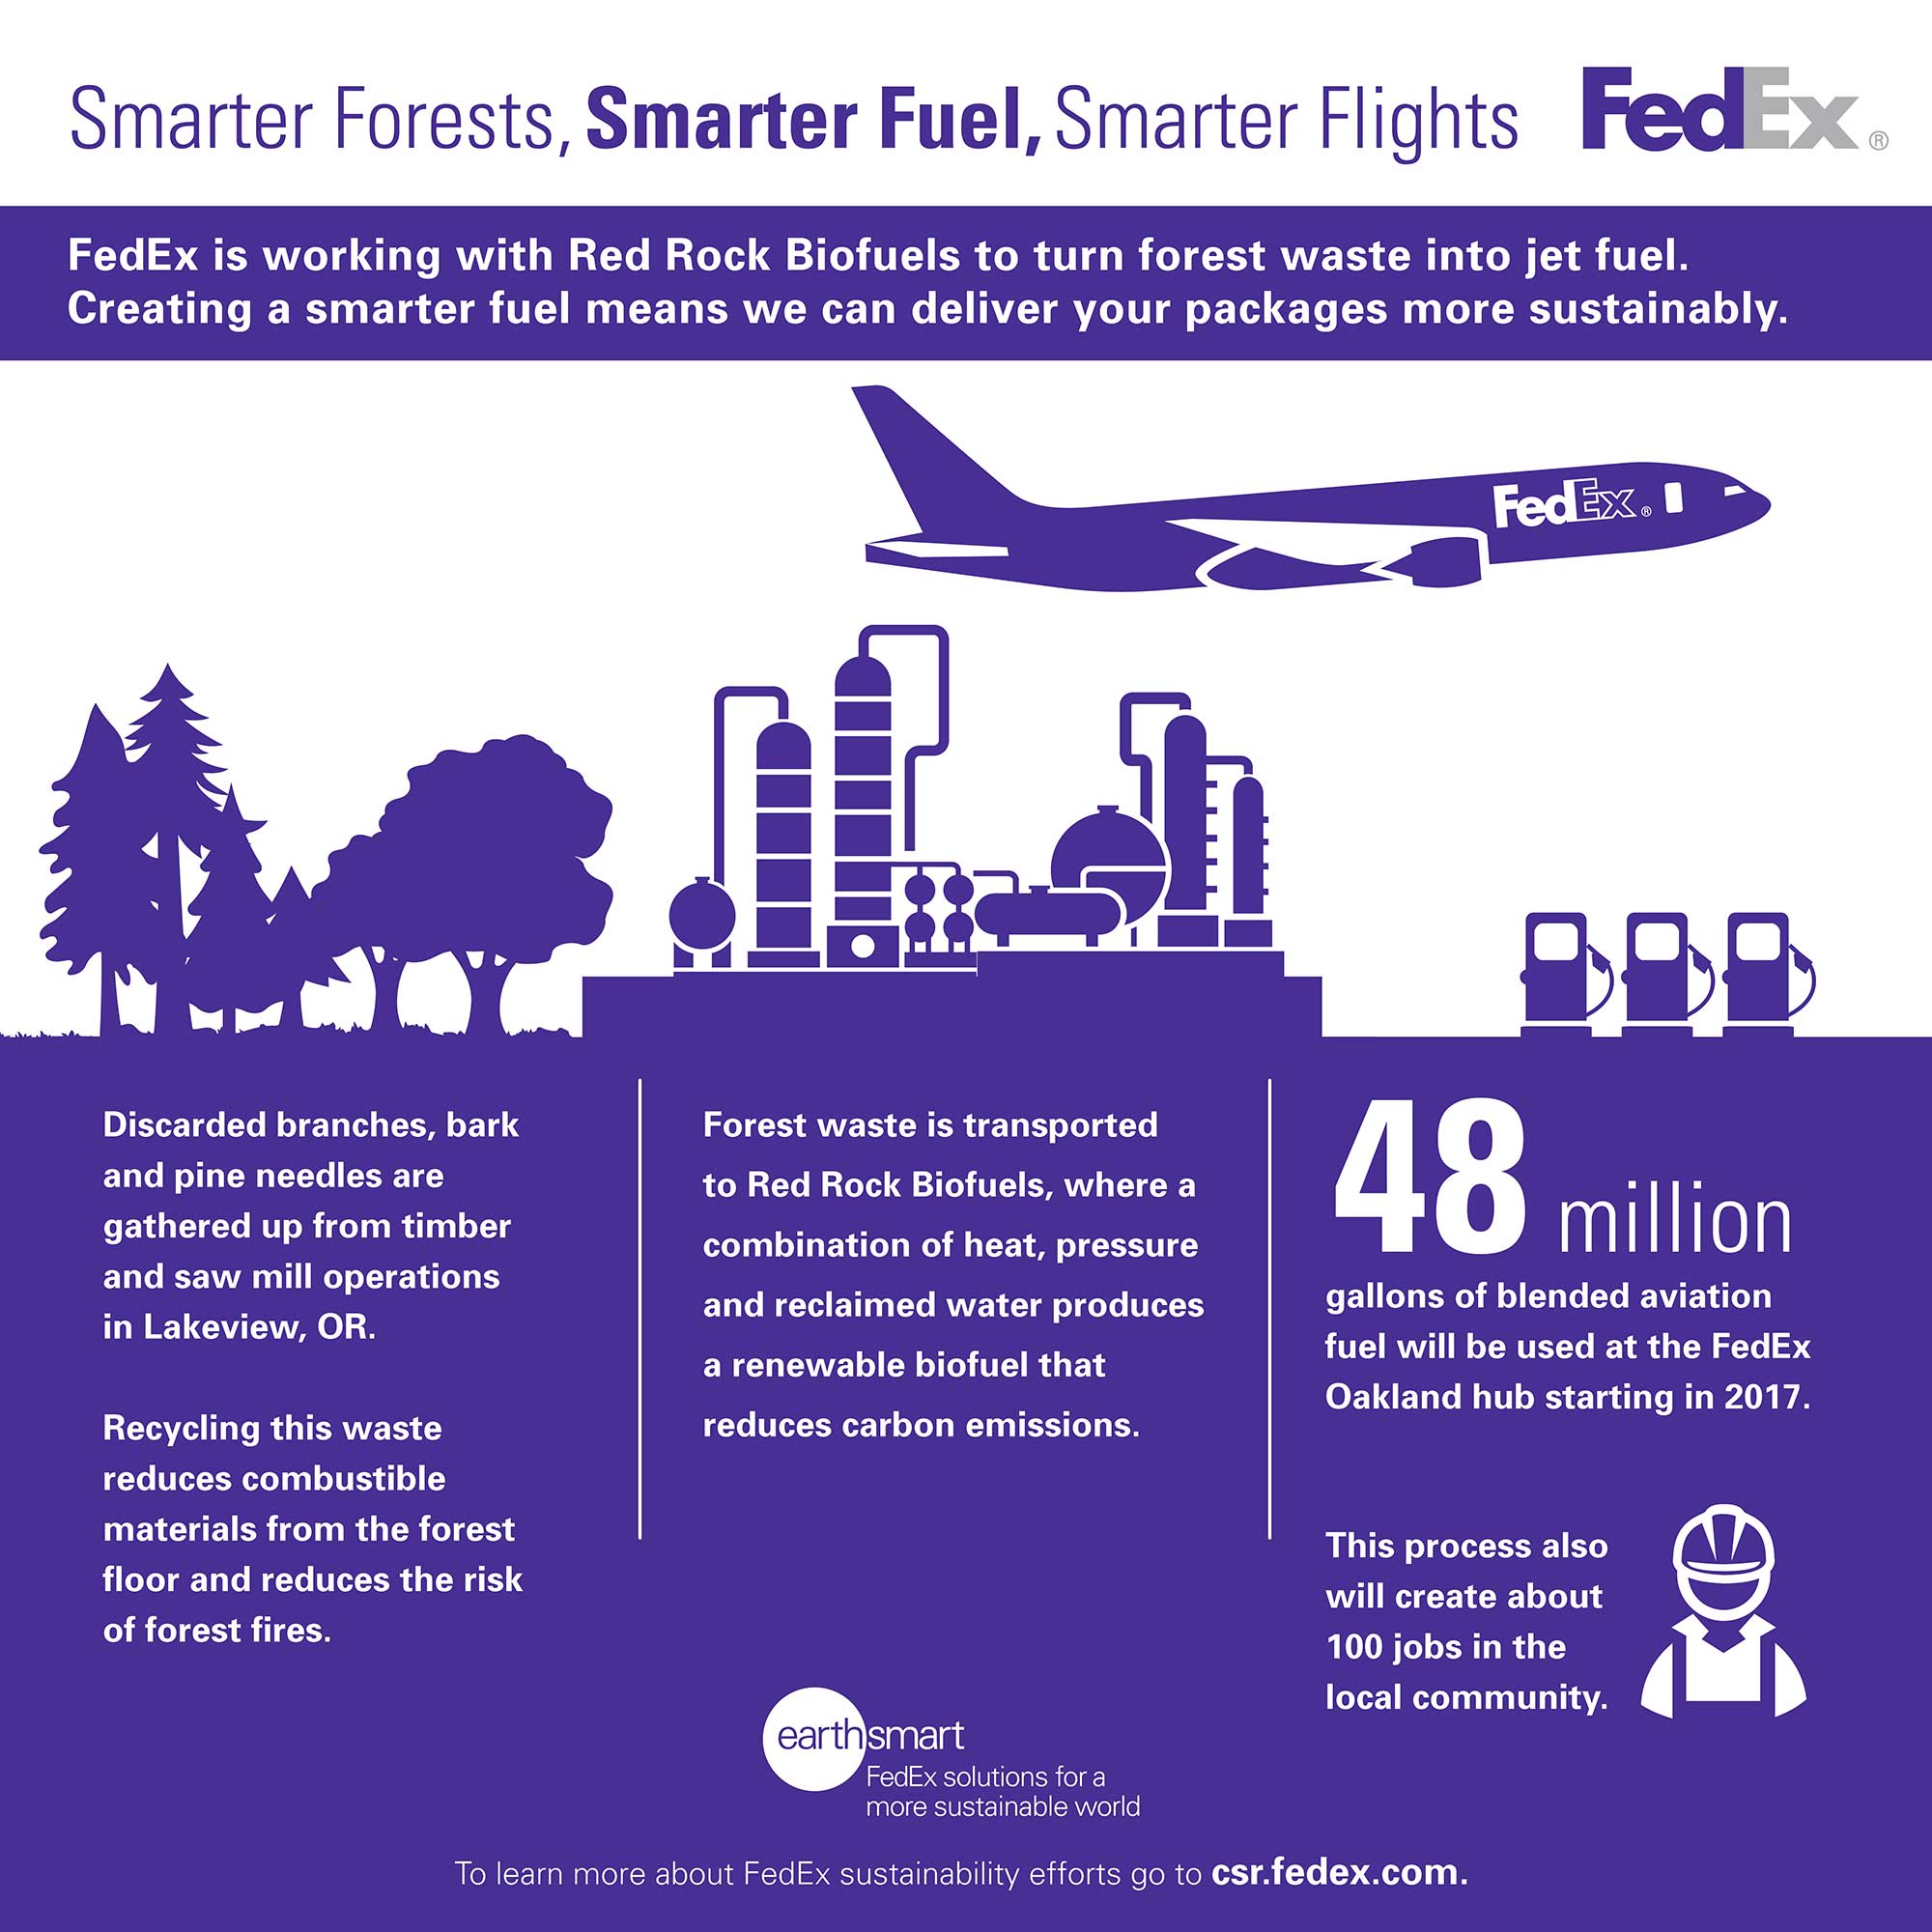 FedEx Flight Operations Logo - Biofuels Take Flight with FedEx [Infographic]